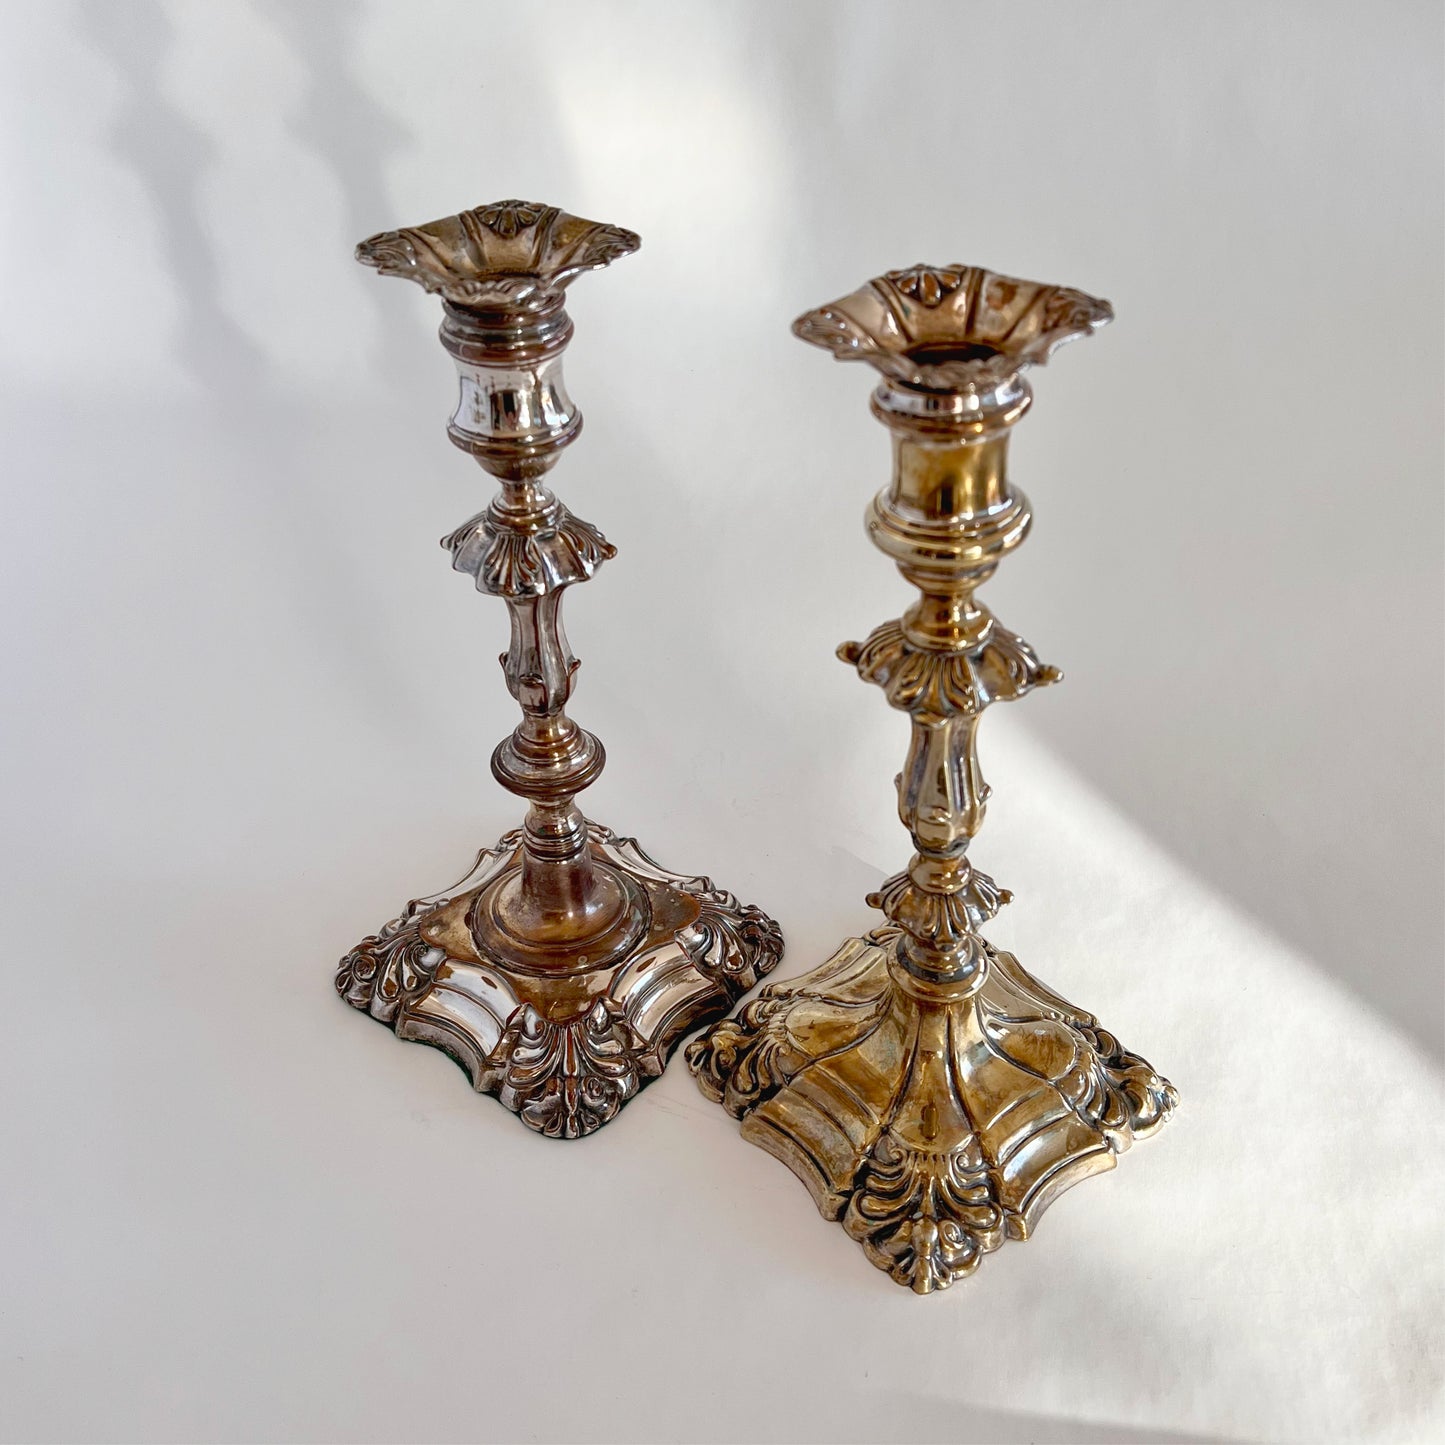 English Edwardian silver-plated candlesticks, set of 2